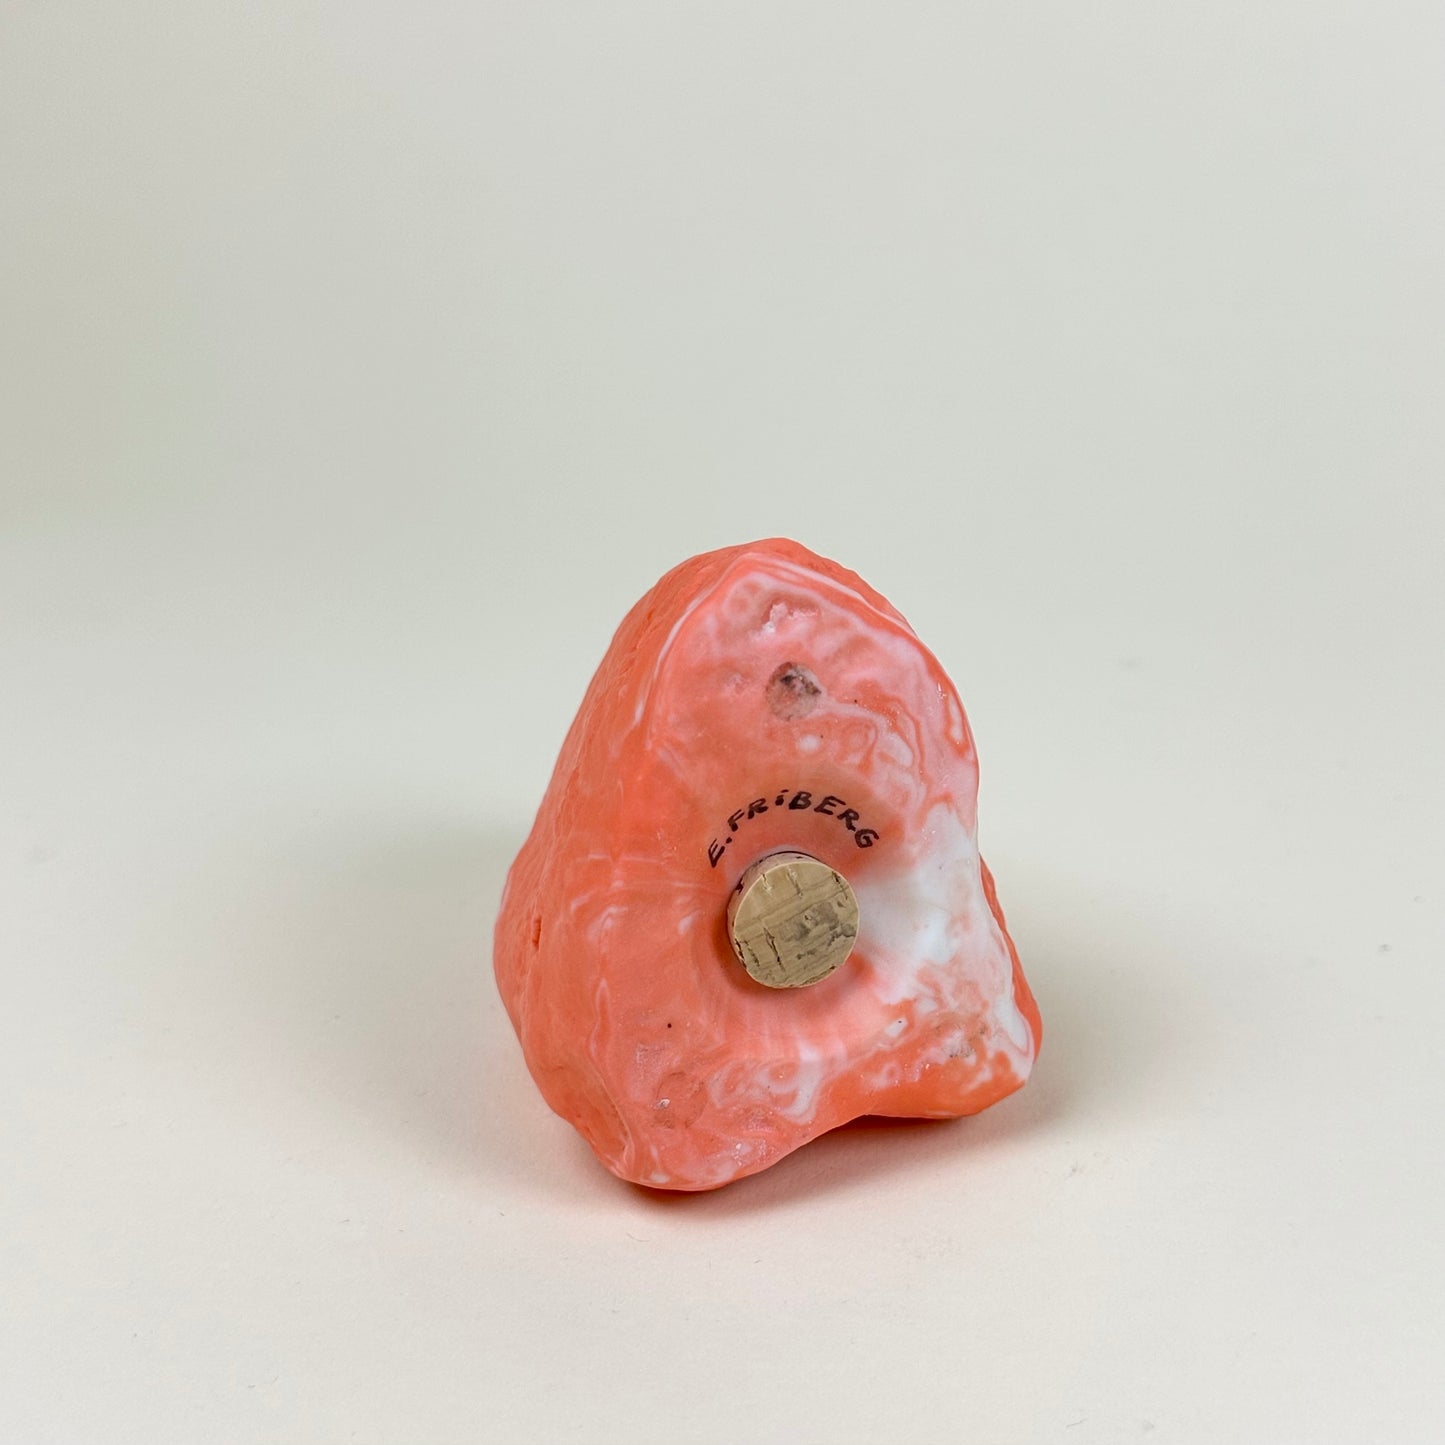 Apricot salt shaker by Emma Friberg